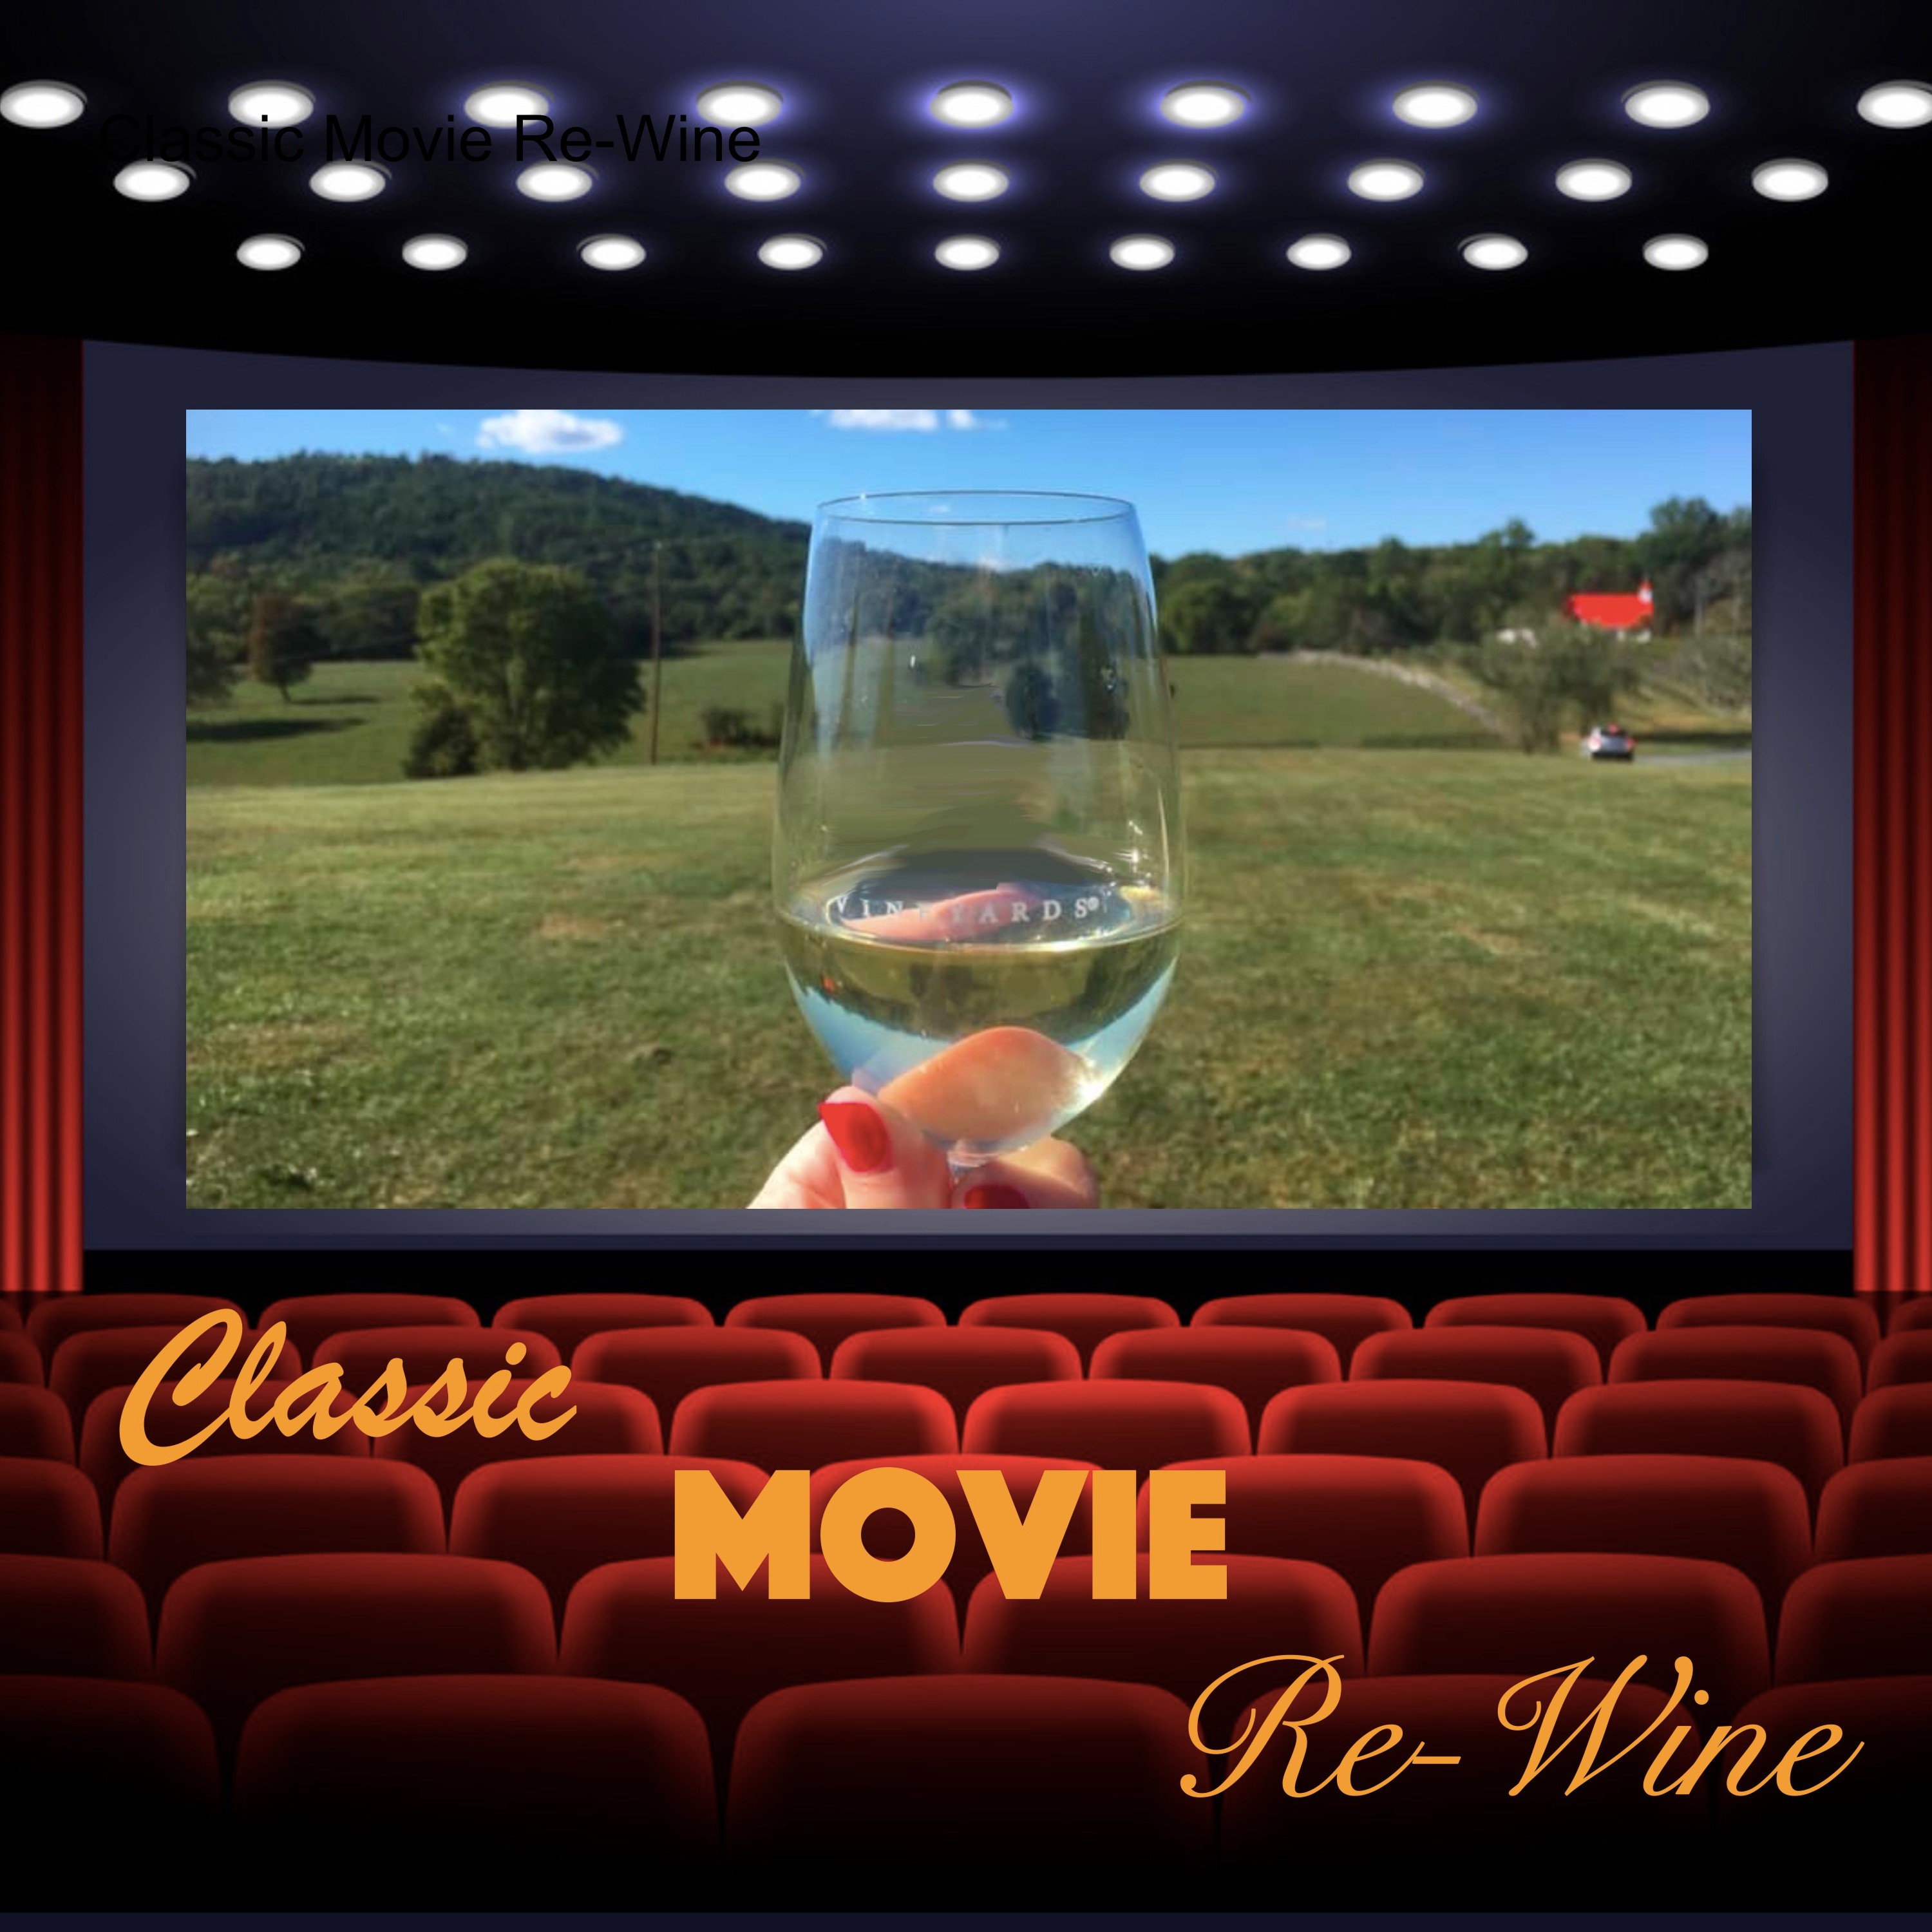 Classic Movie Re-Wine